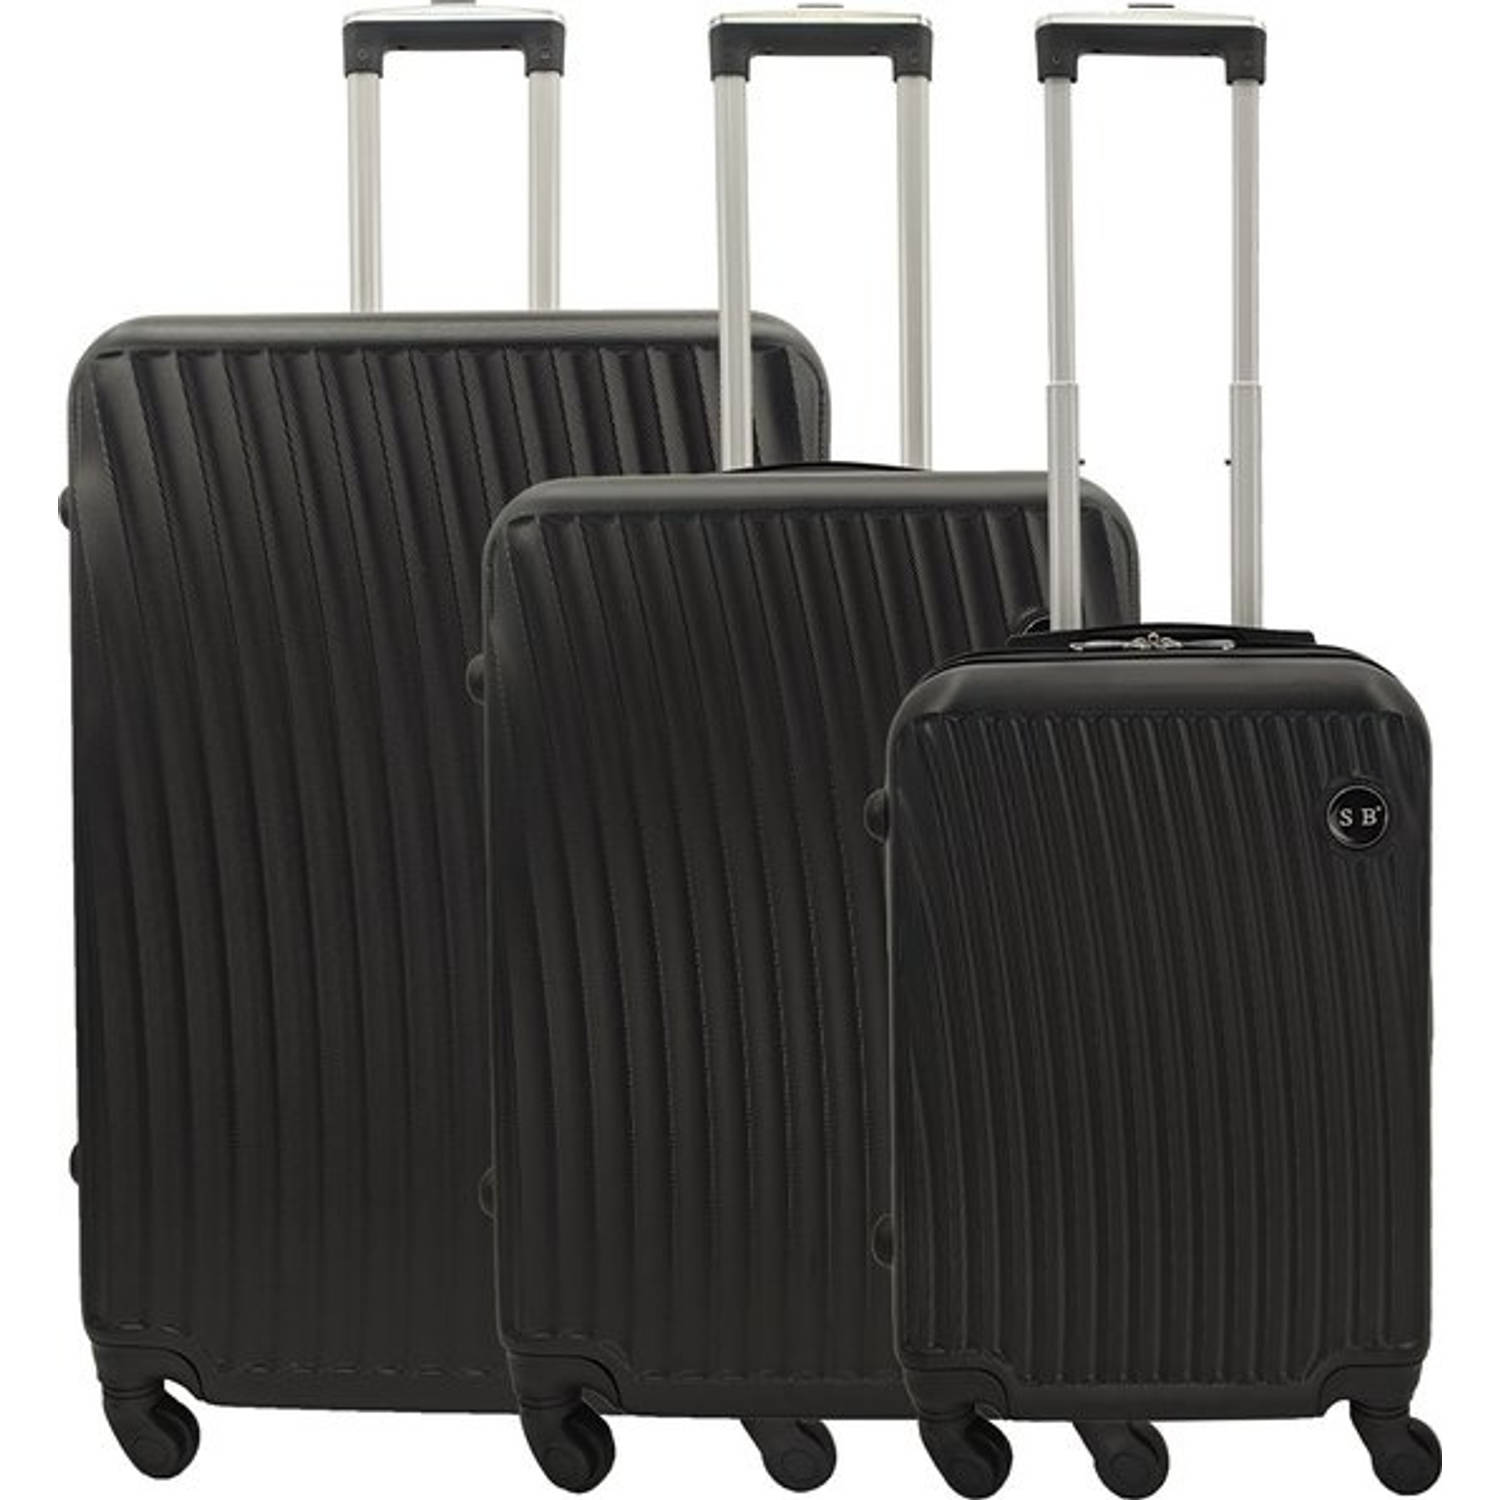 ergens uitgehongerd Mechanisch SB Travelbags 3 delige Kofferset - Zwart | Blokker